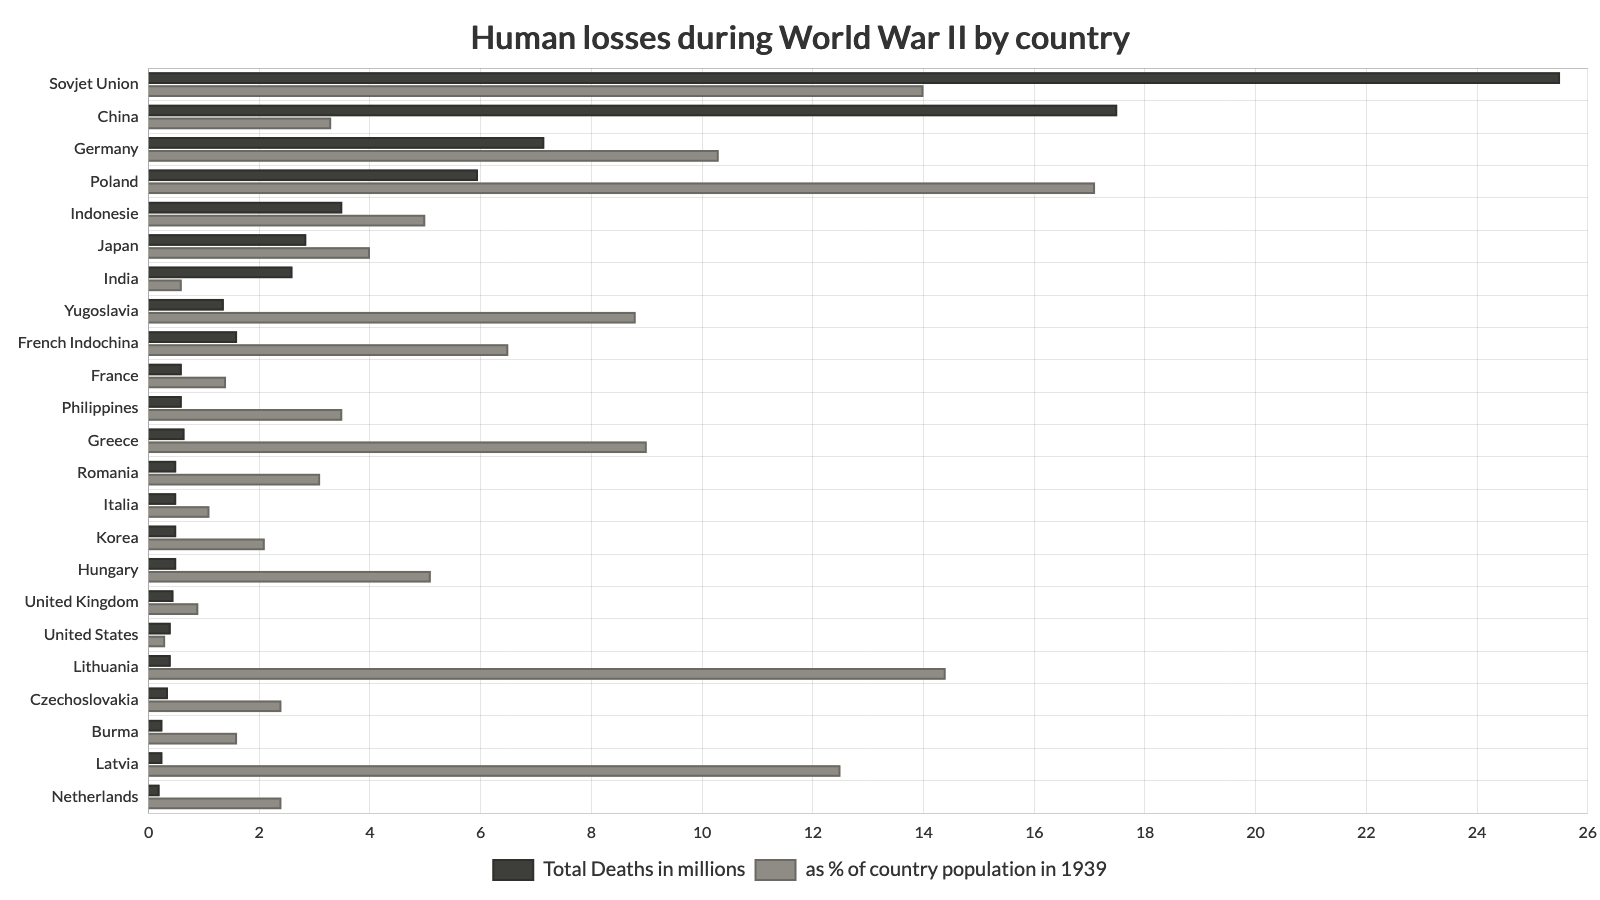 Horizontal Bar - Human losses during World War II by country